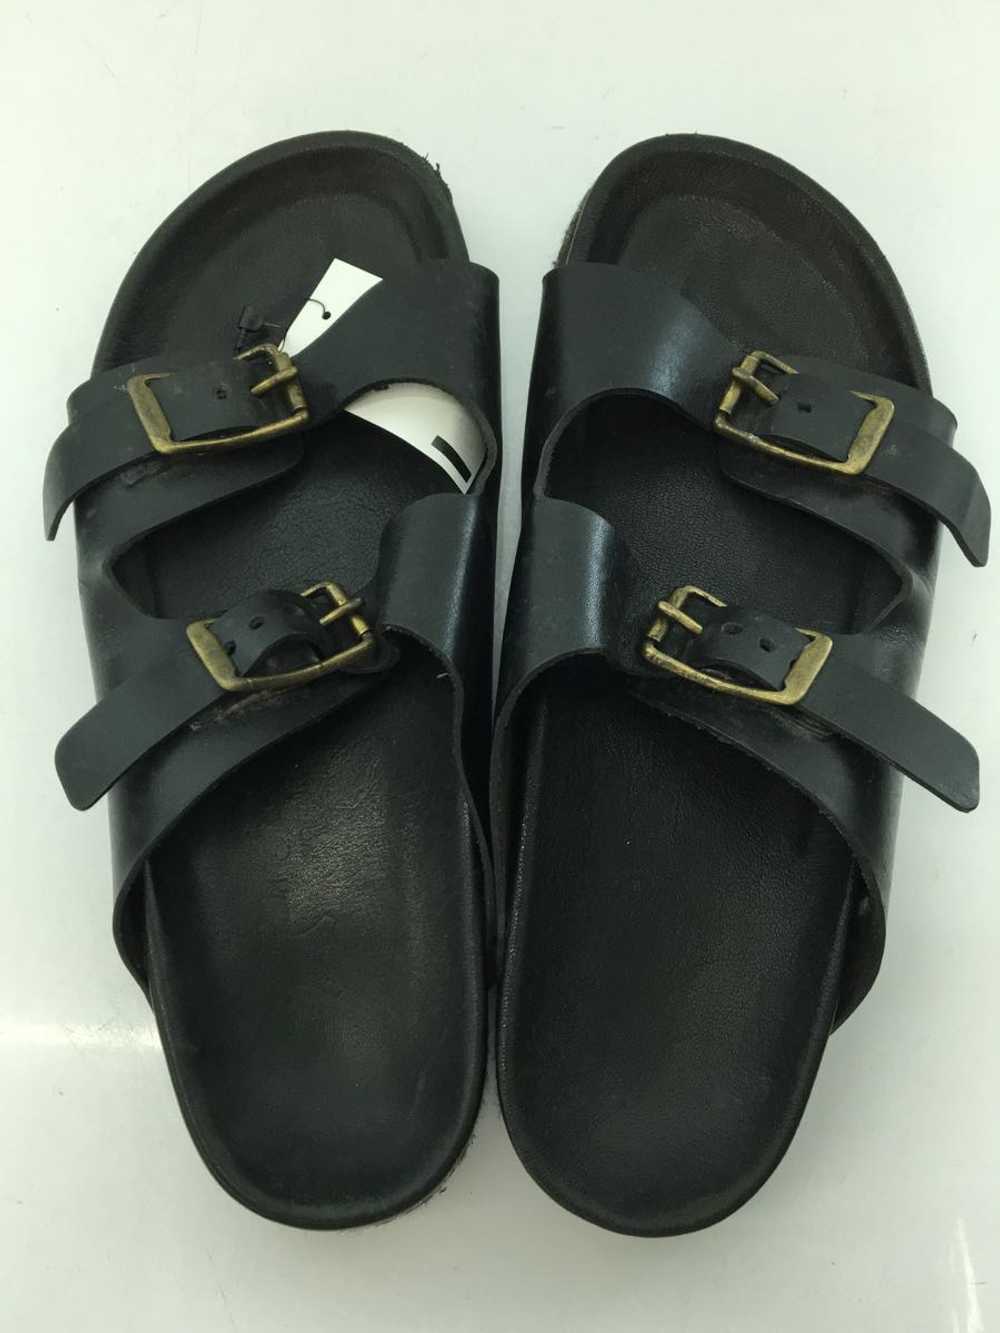 Yuketen Sandals/41/Black/Leather Shoes BUc30 - image 3